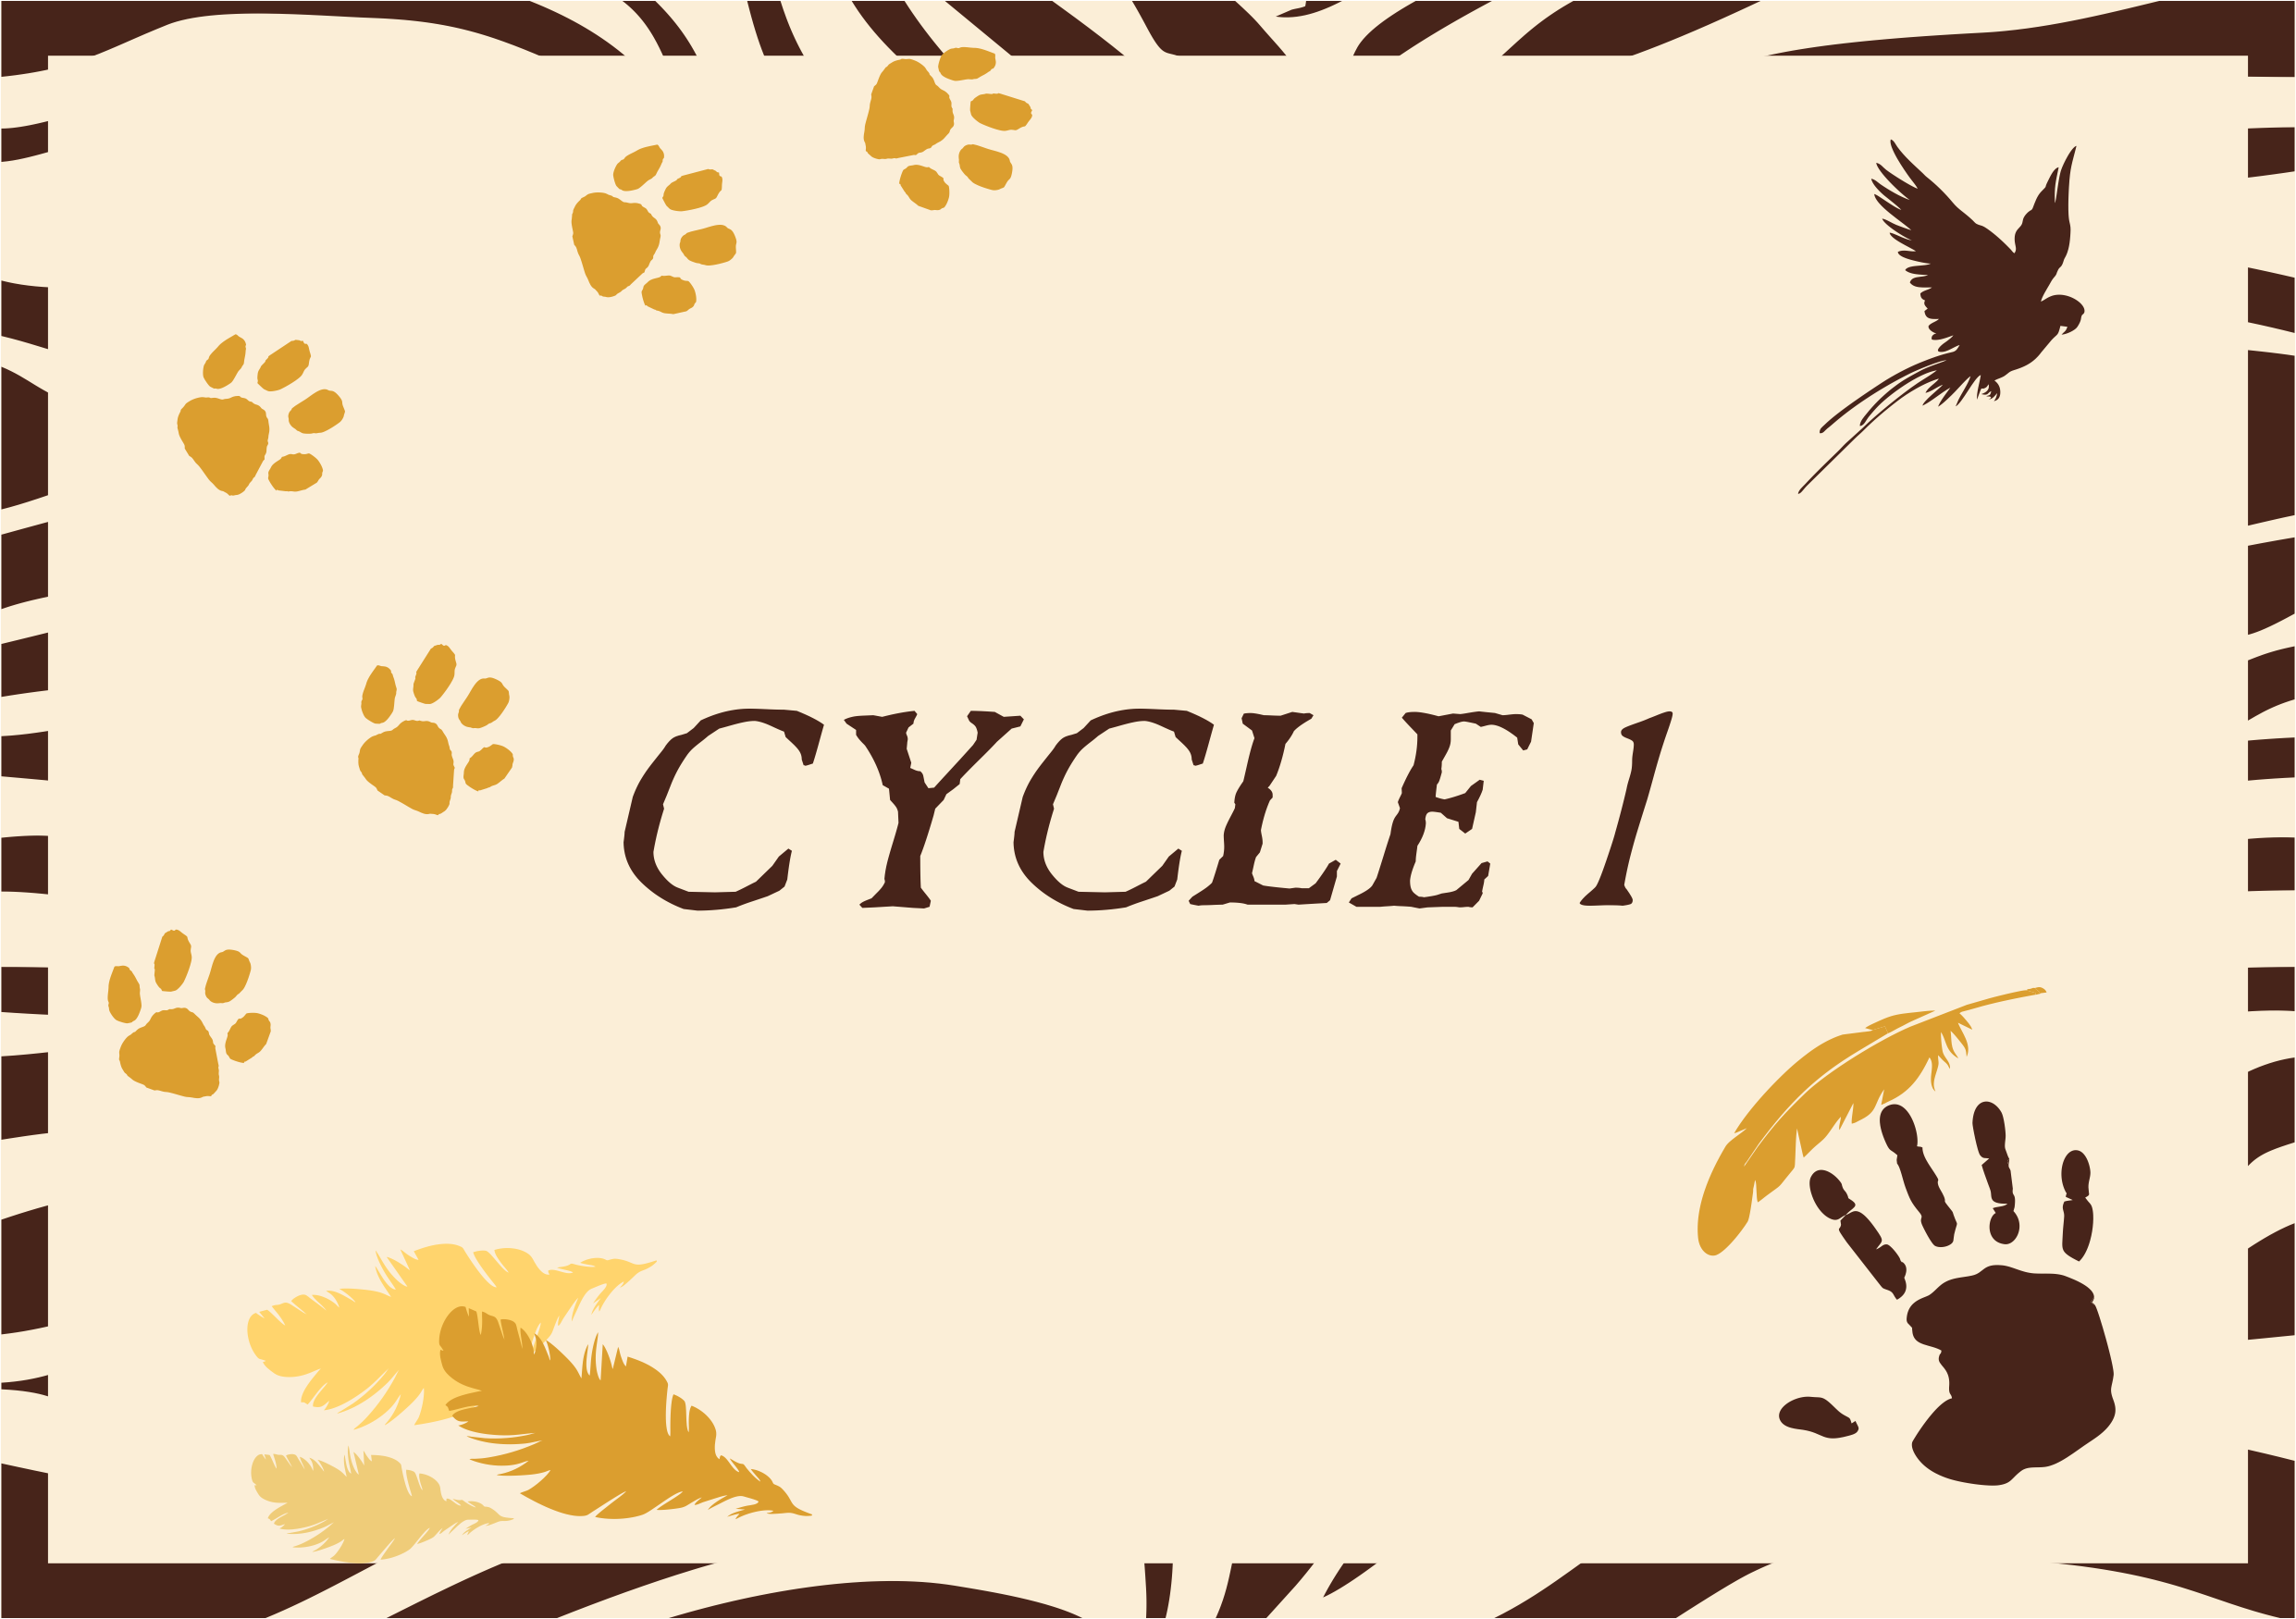 Cycle 1